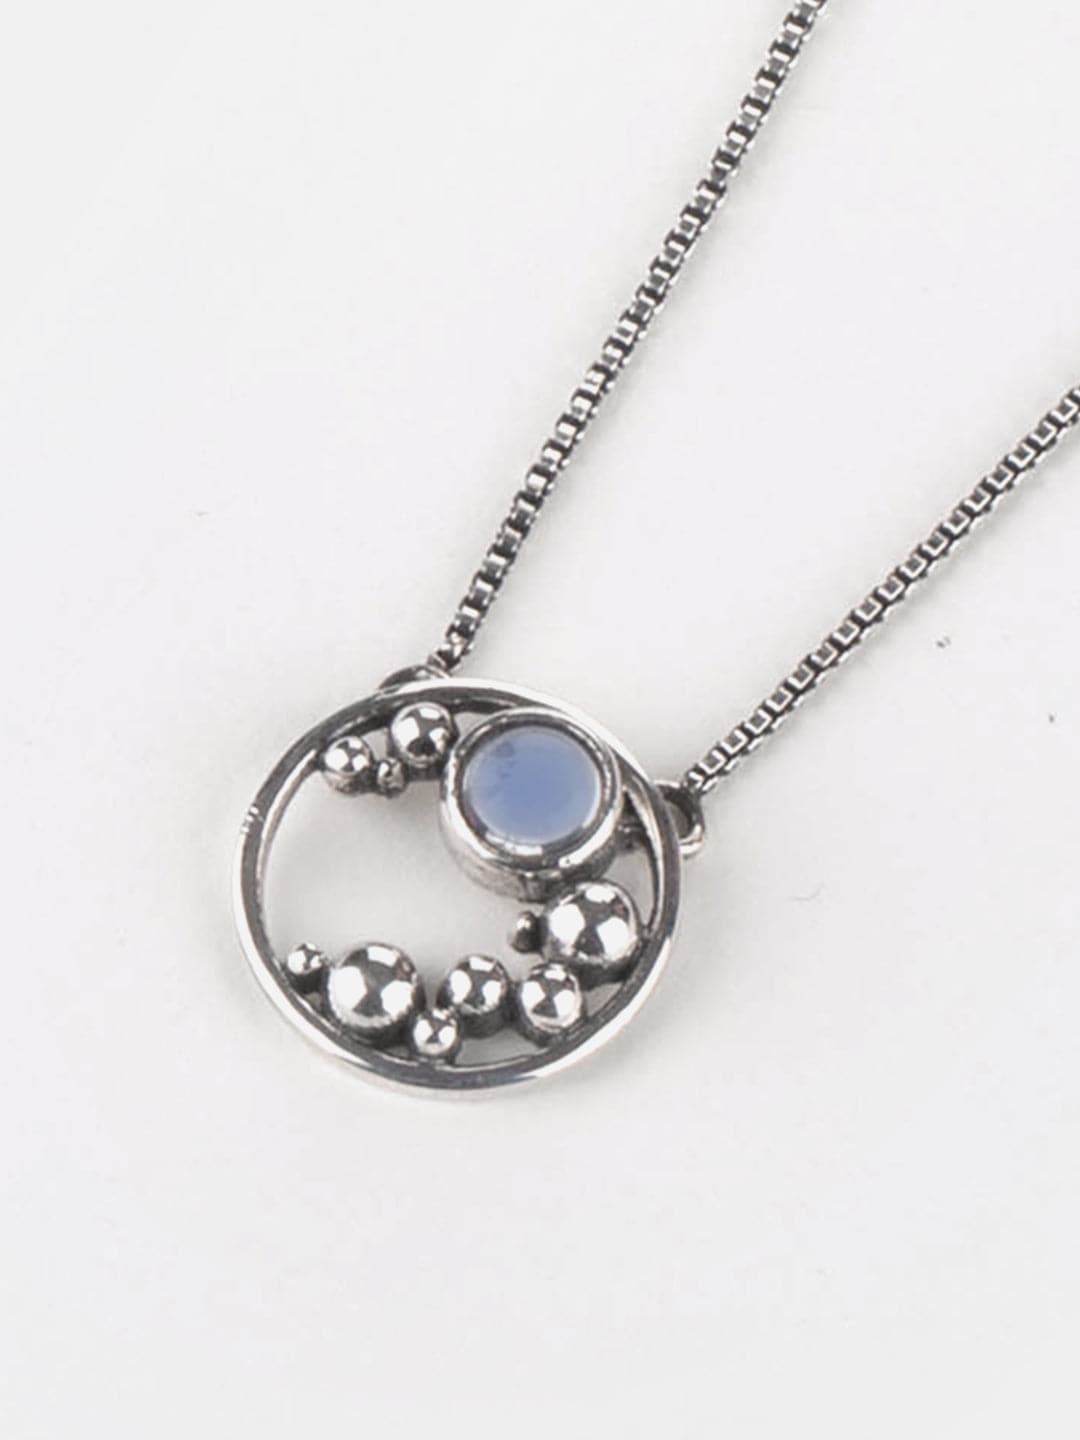 A Quiet Dawn Necklace in 925 Silver